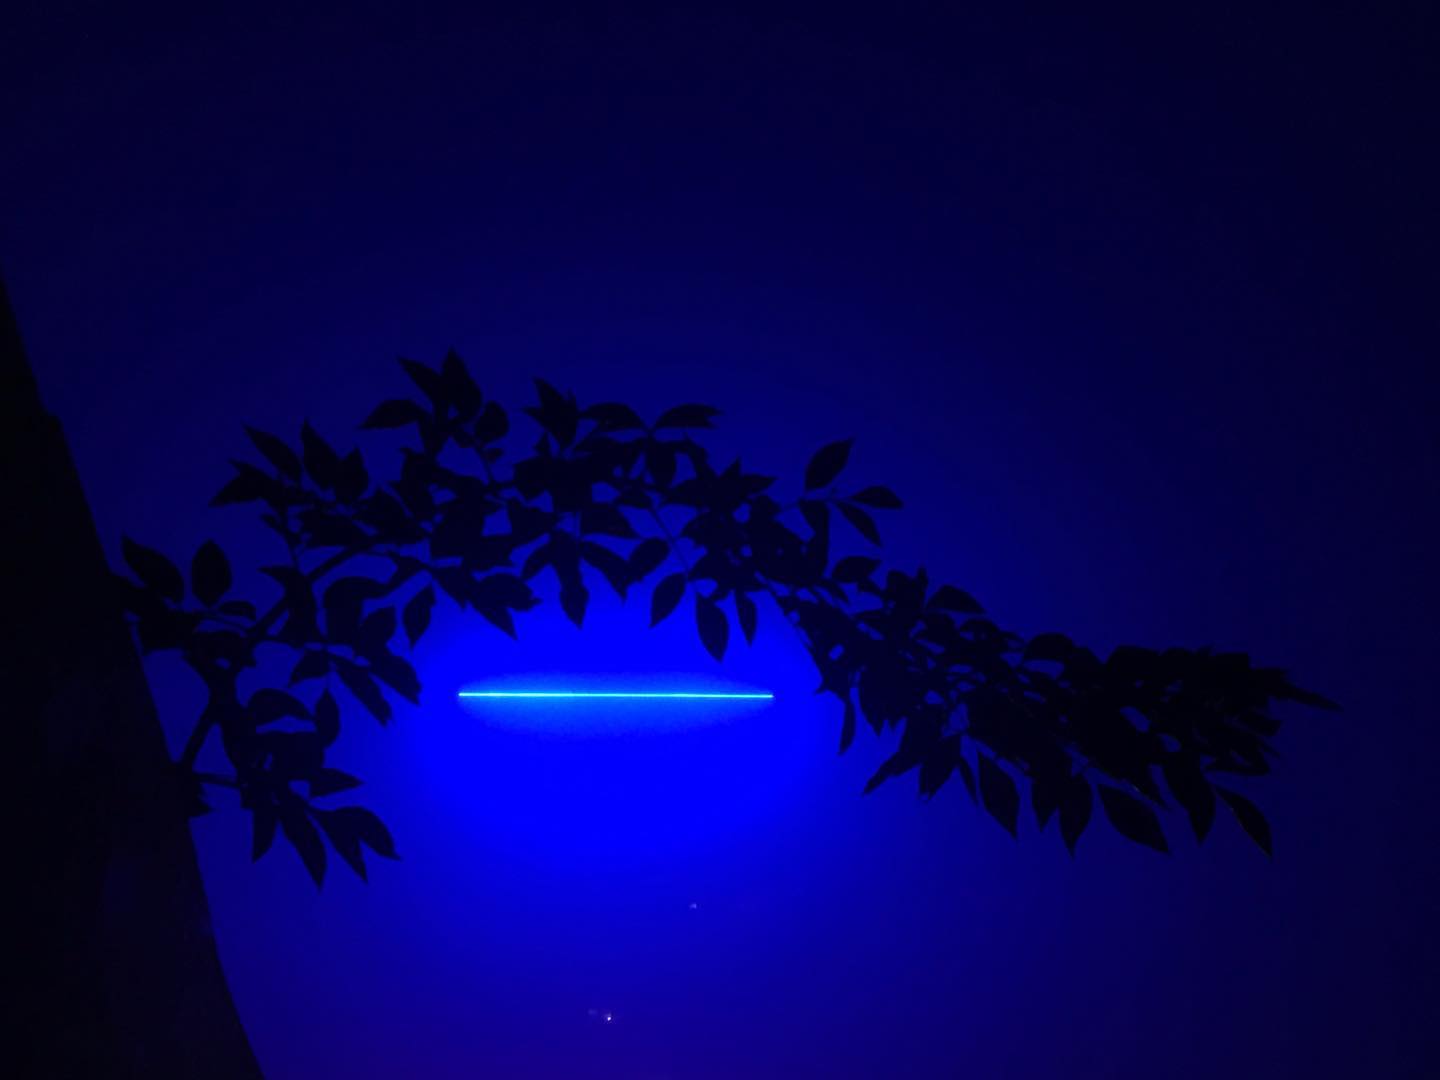 blue light floats behind reaching silhouette